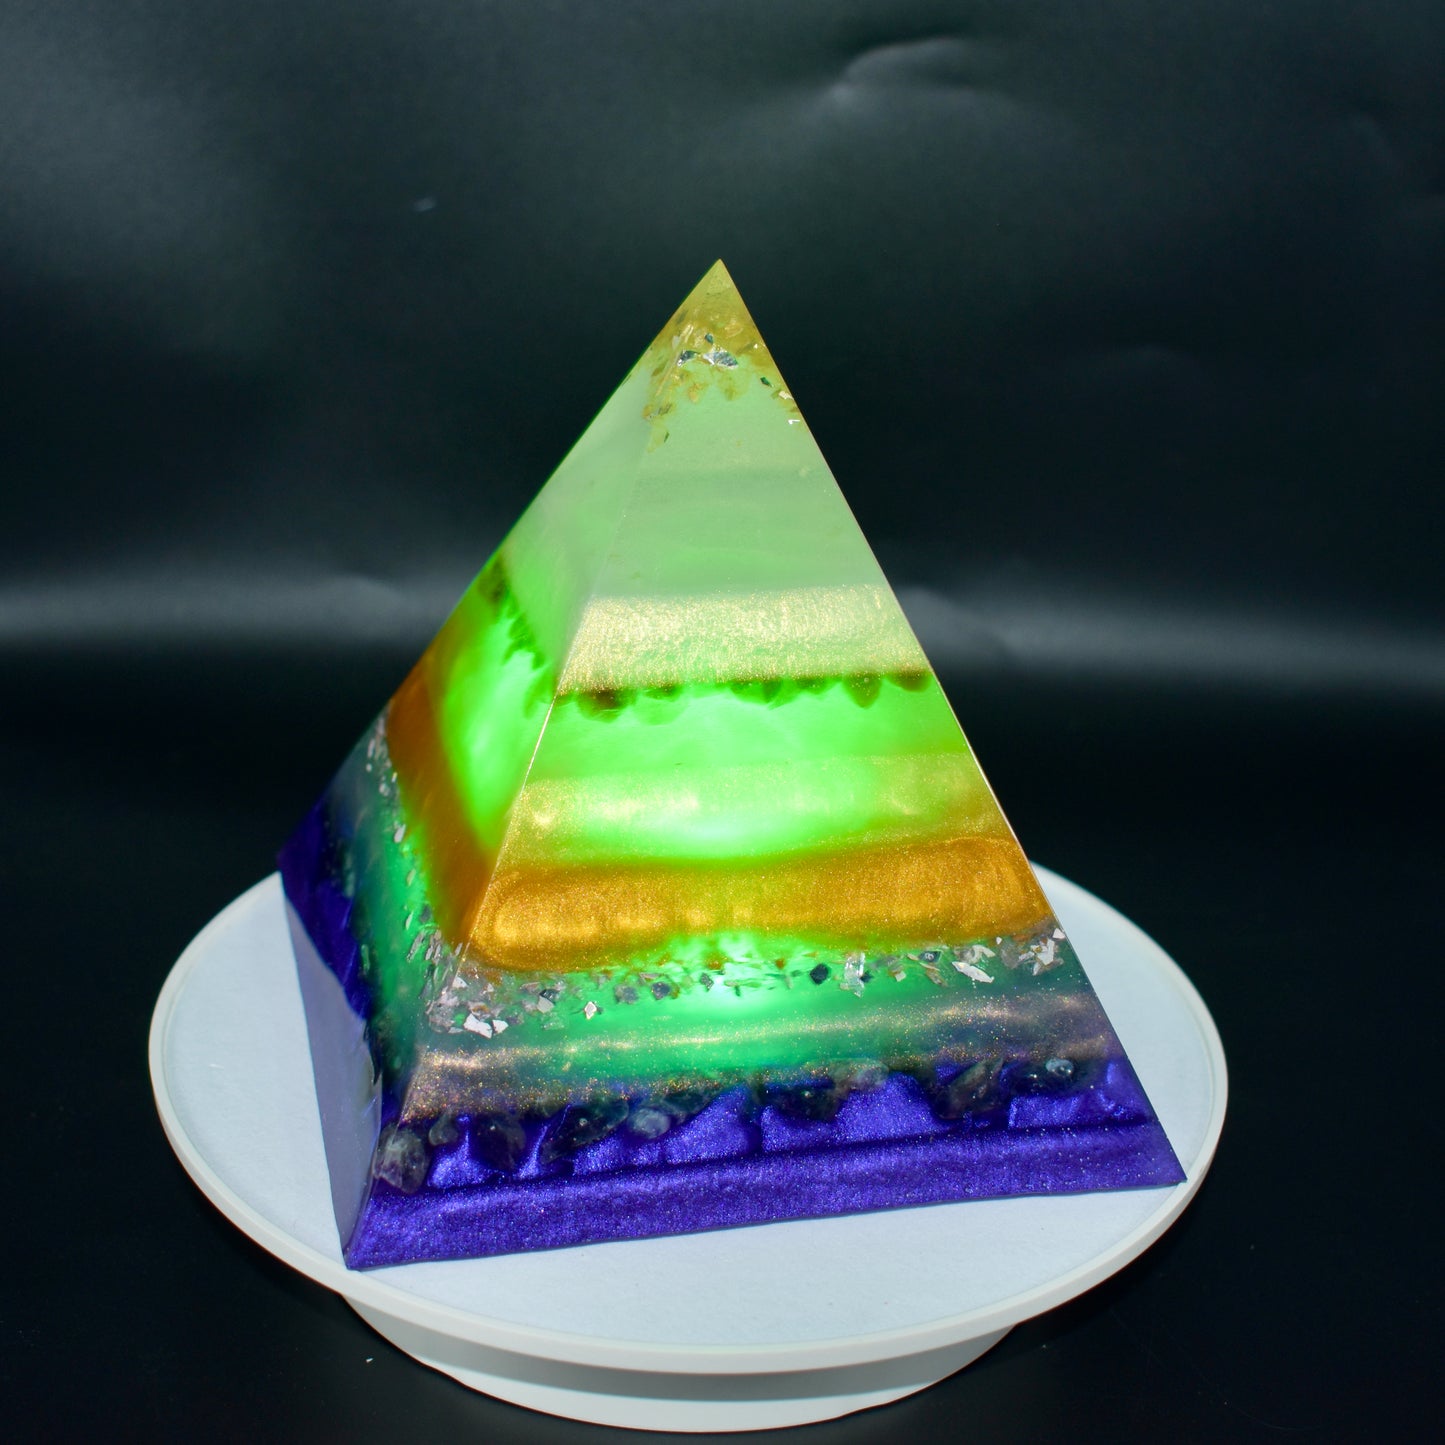 Purple & Gold LED Nightlight Pyramid Sculpture